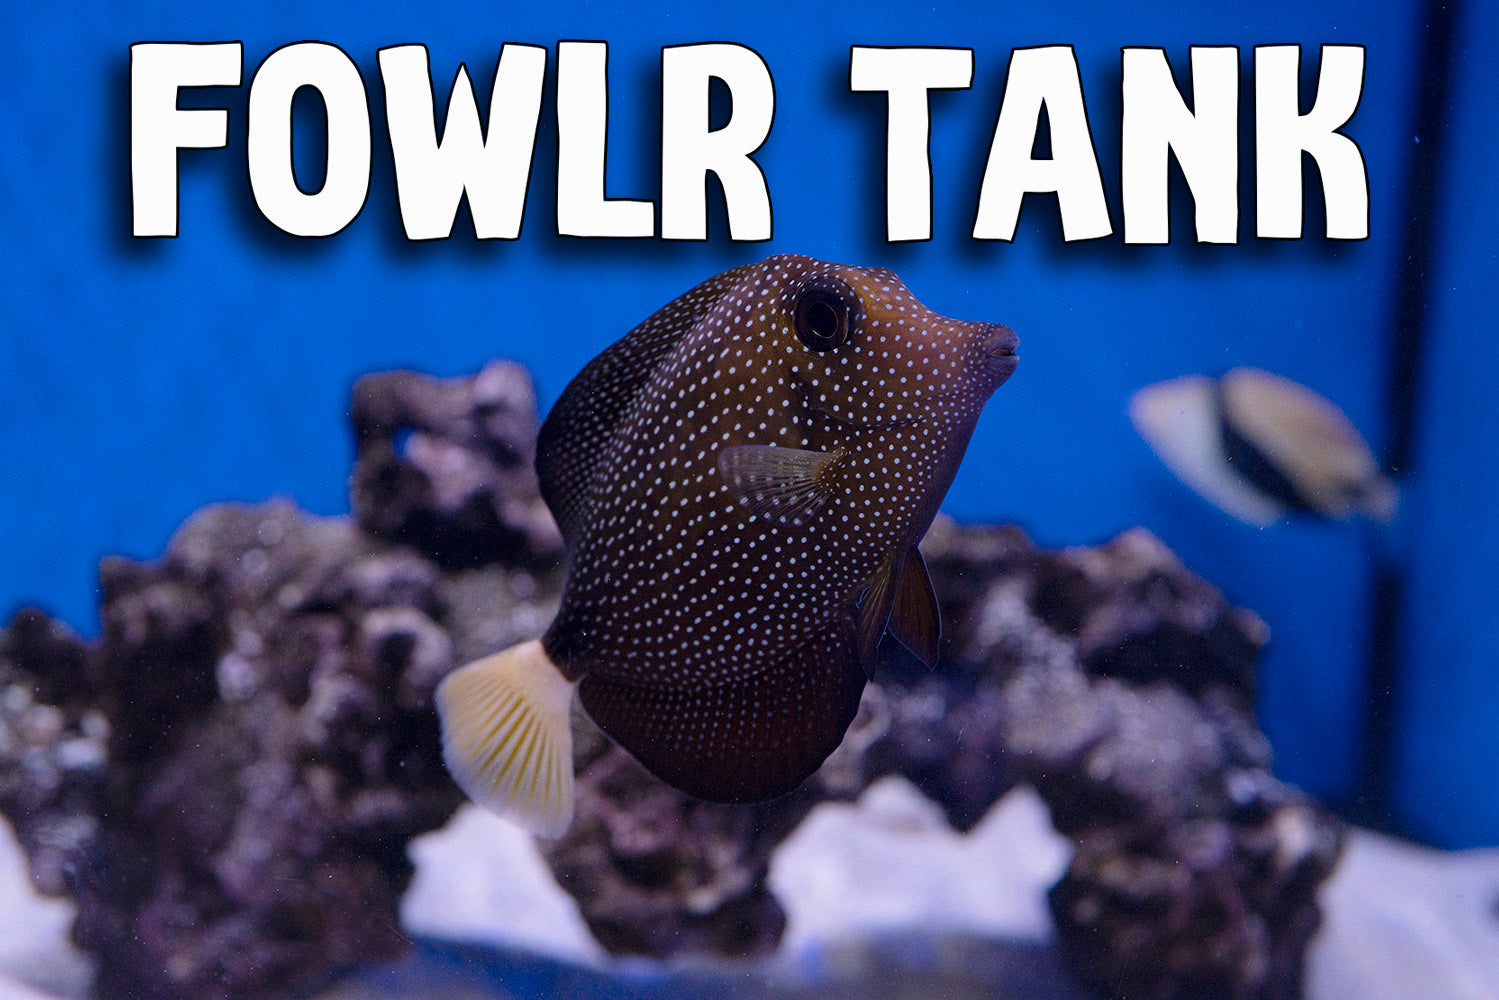 Funny Rare Animals | Exotic Aquarium Fish Gifts | Lionfish Pin